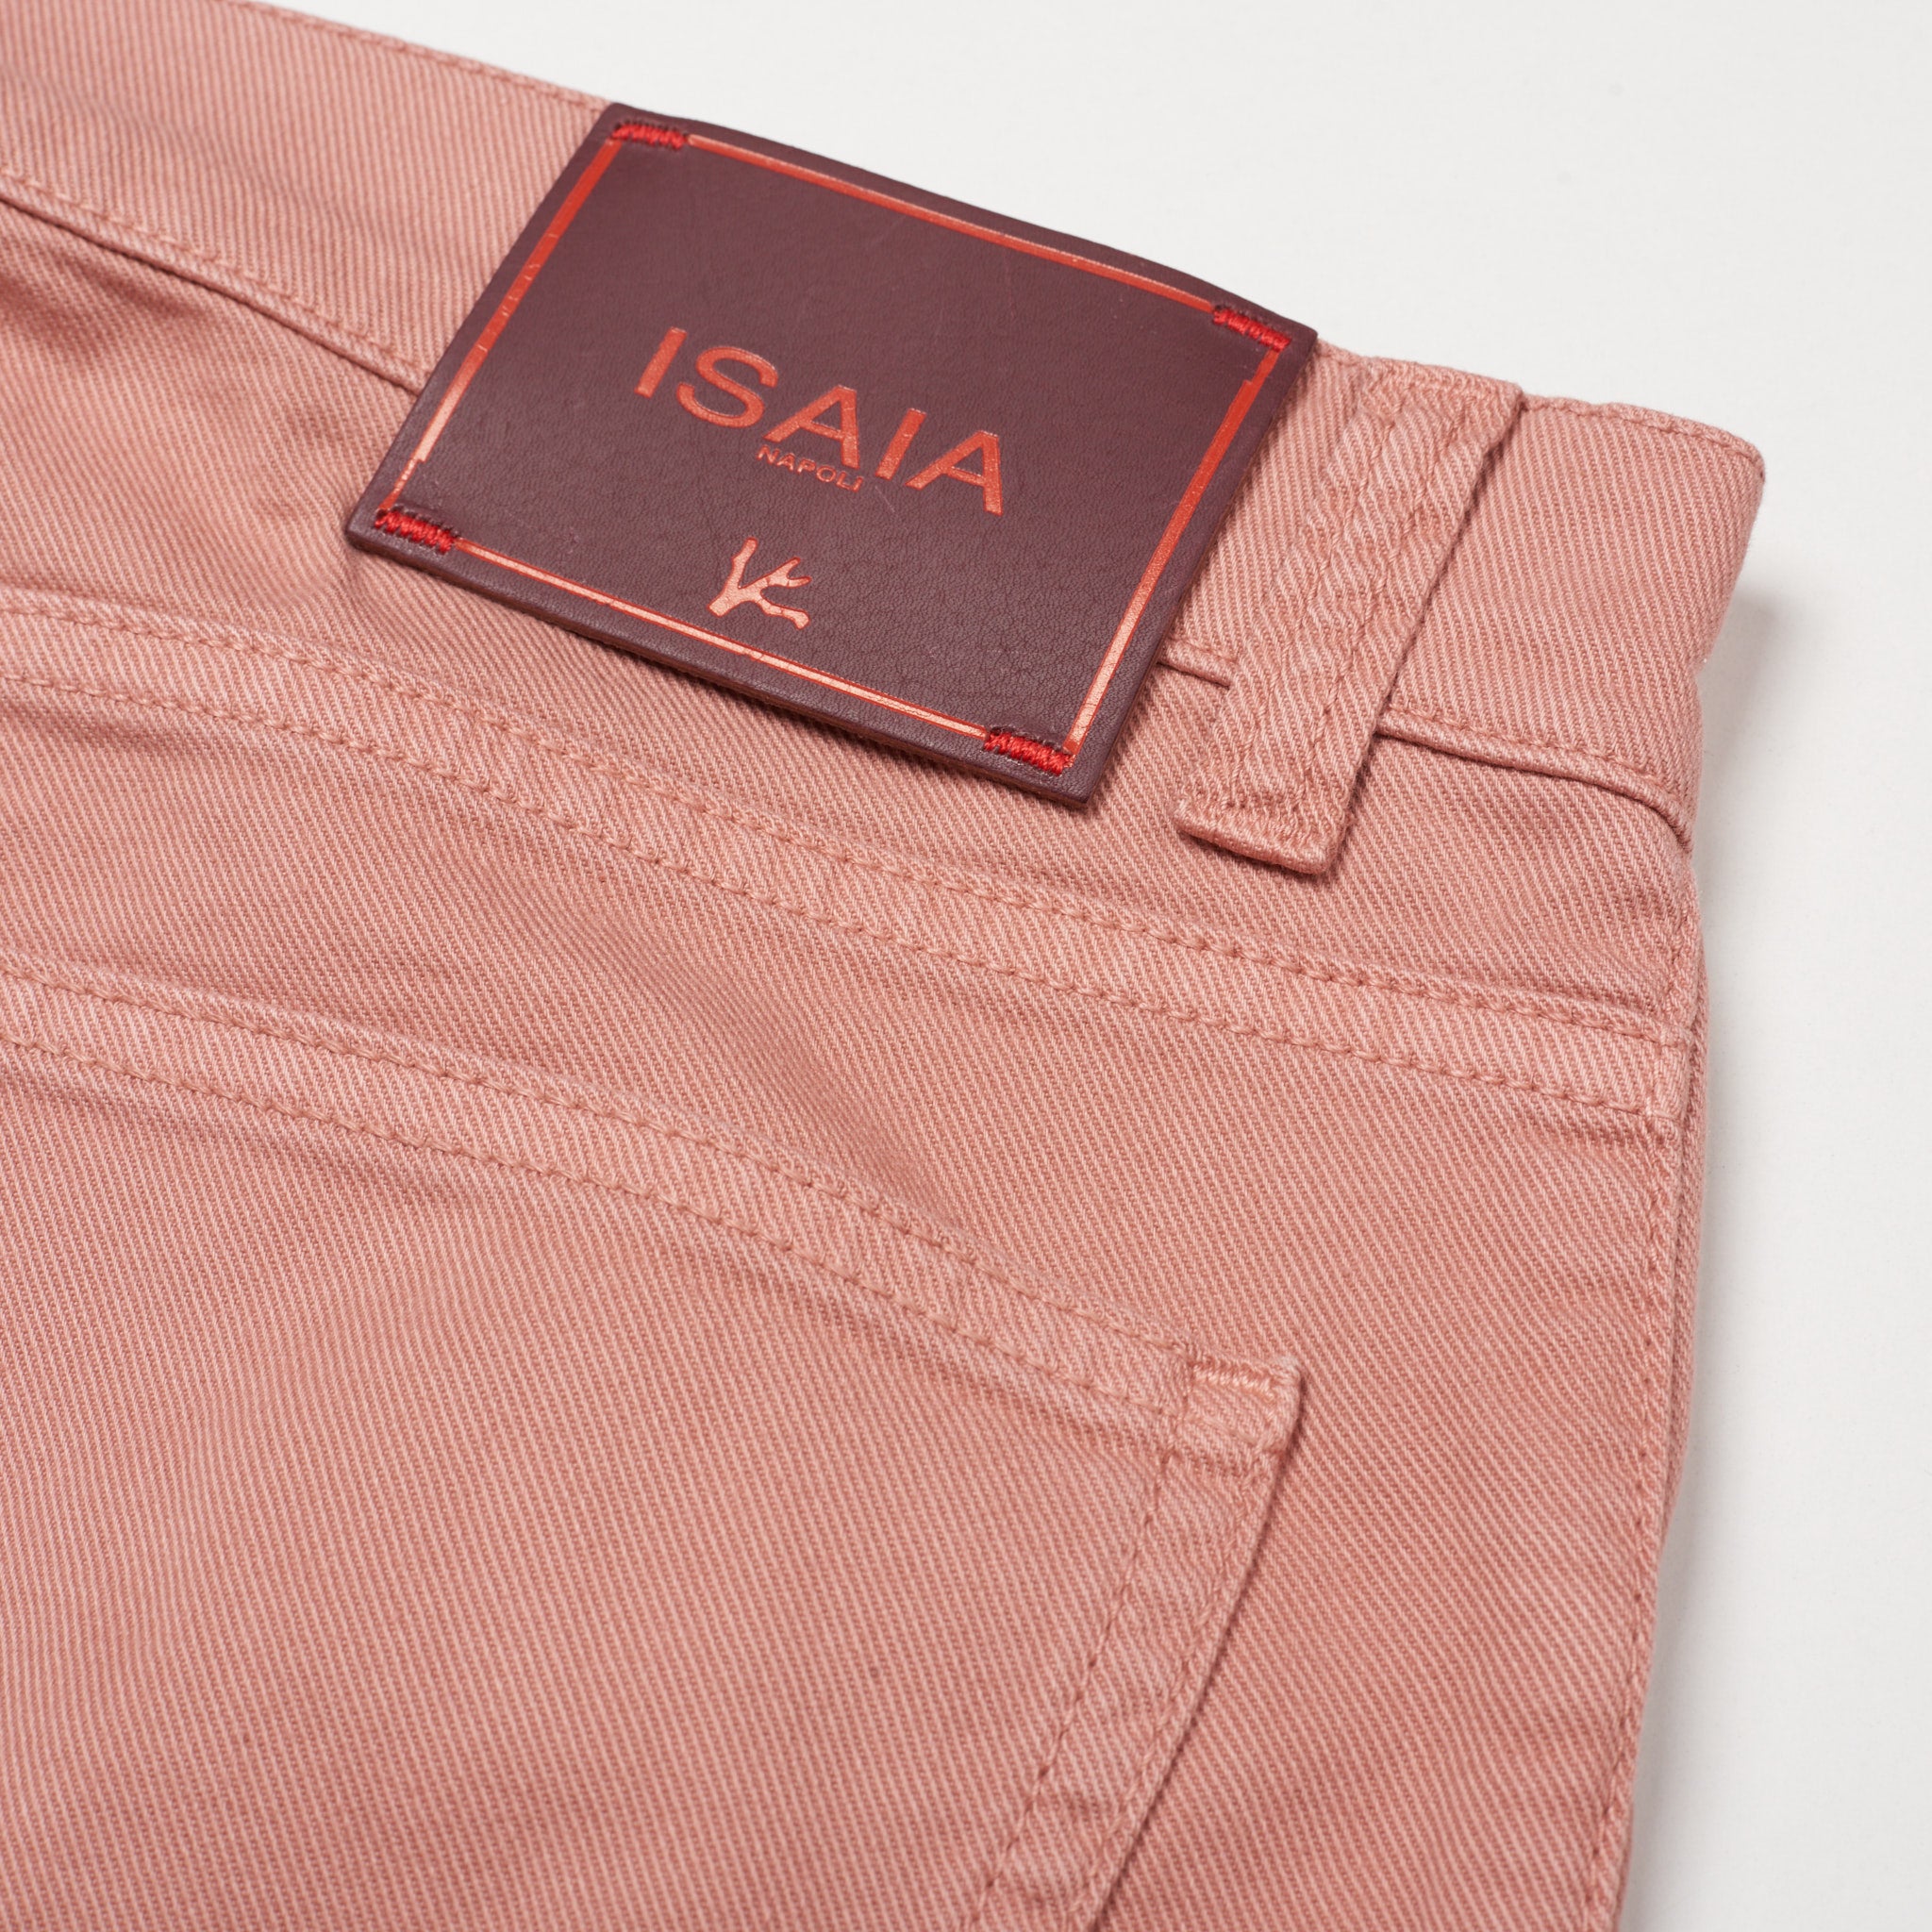 ISAIA Napoli Pink Denim Selvedge Jeans Pants NEW US 31 Slim Fit